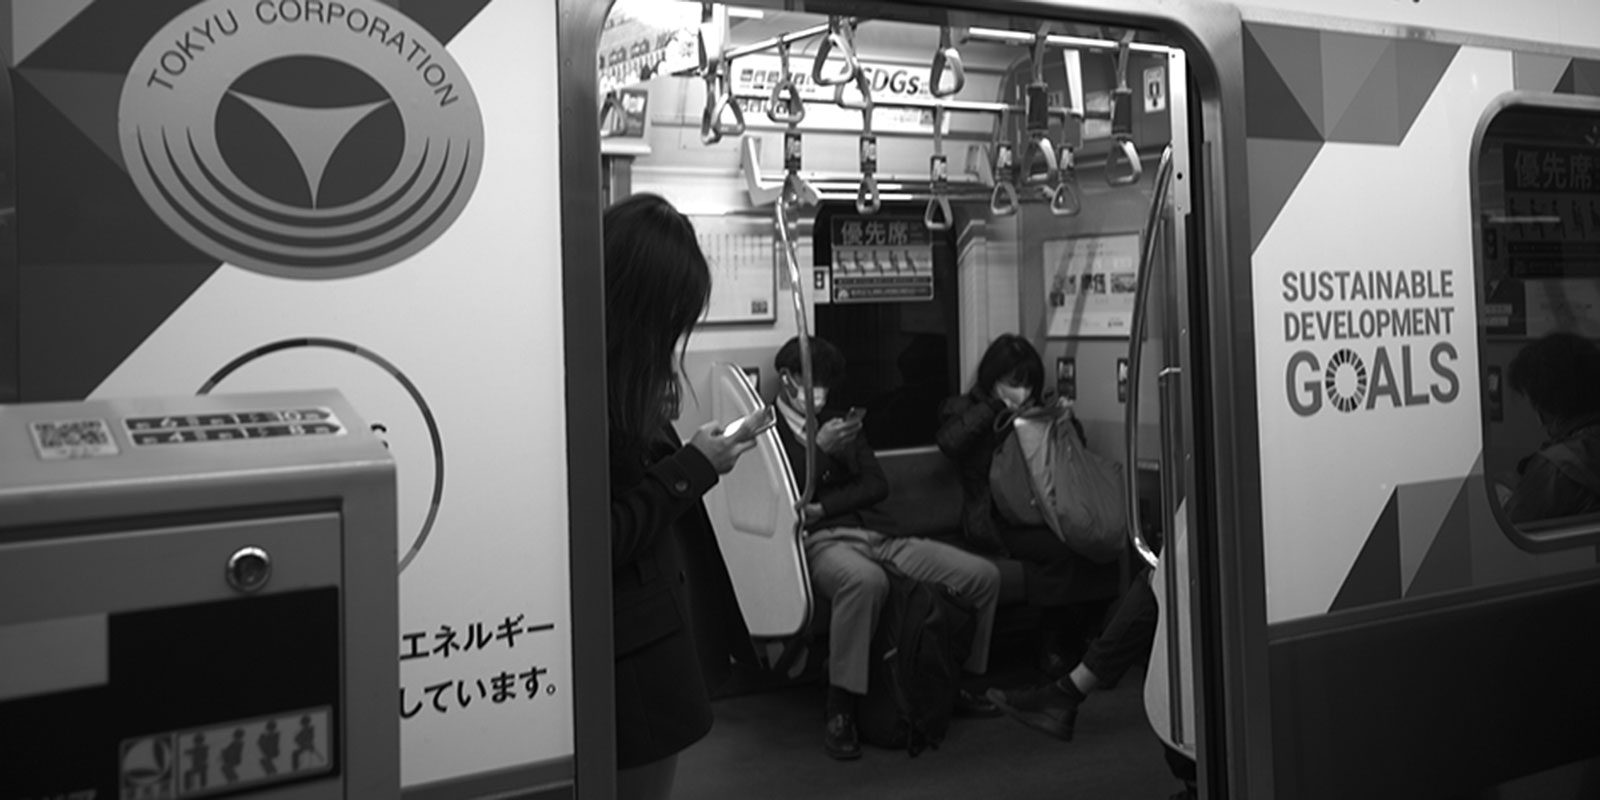 A train promoting the UN’s sustainable development goals passes through Tokyo, 2021